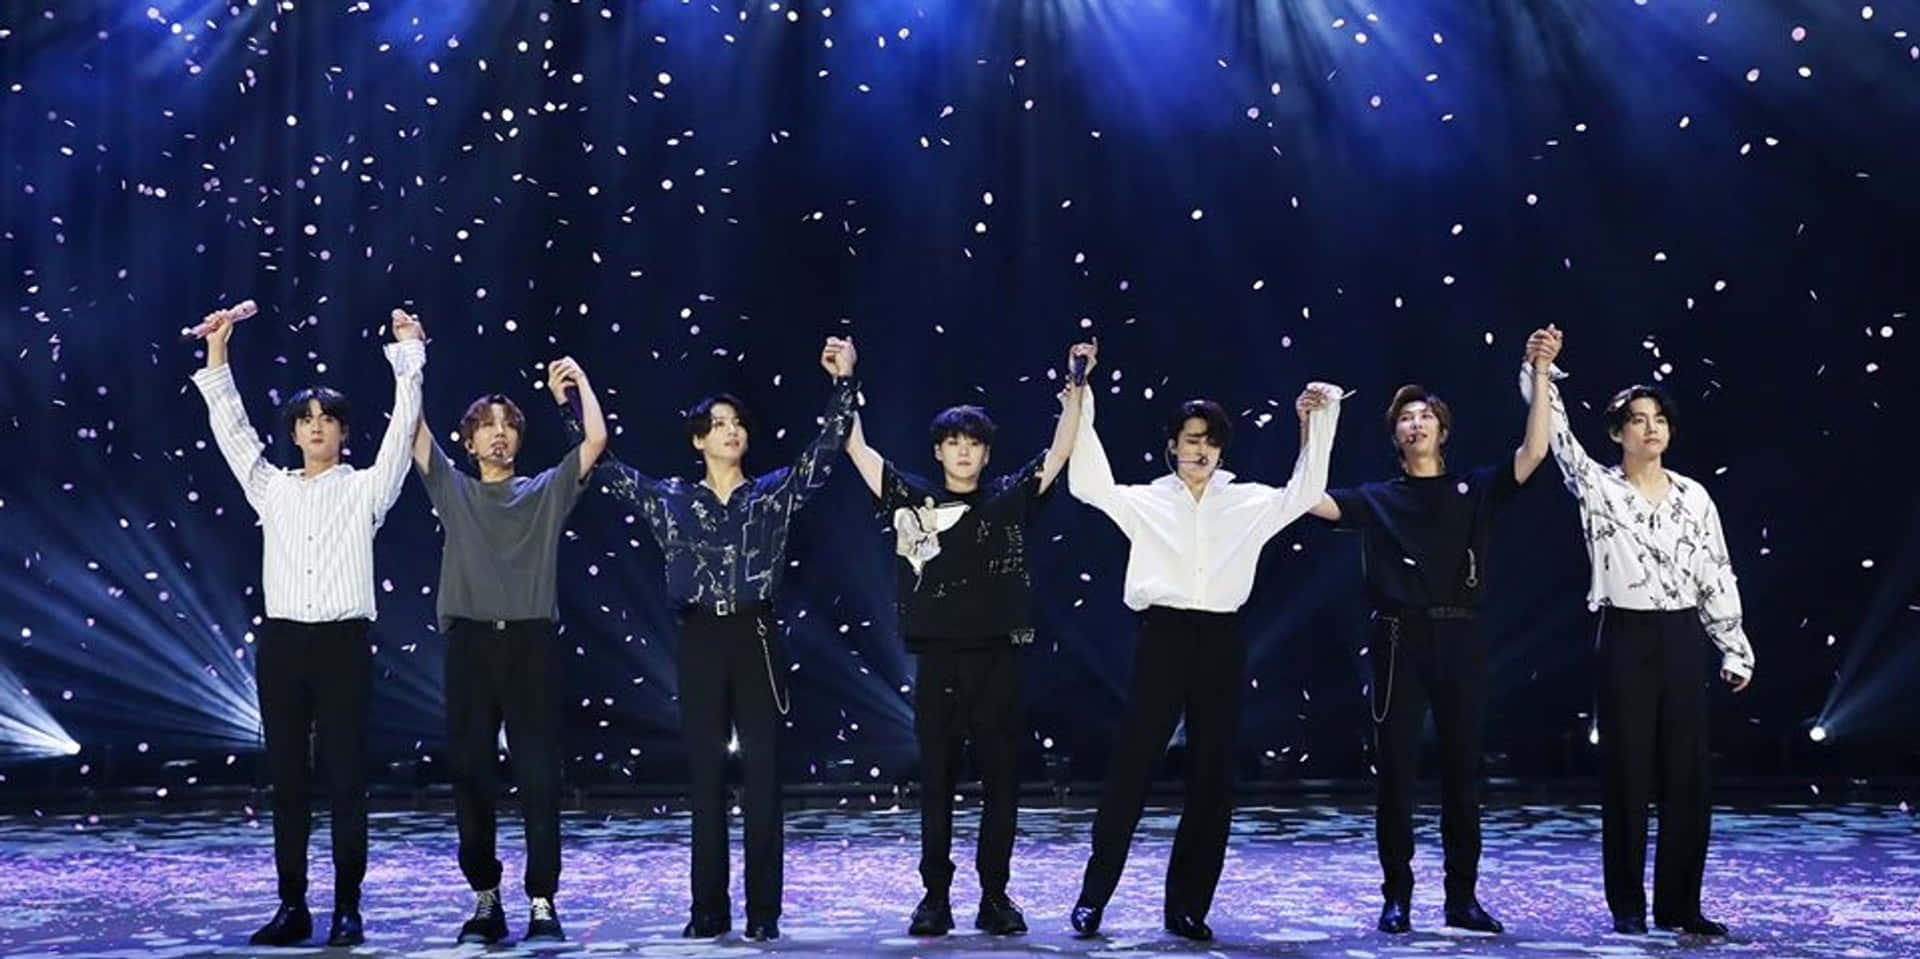 Bts 's 'shine' - Kpop Idol Group